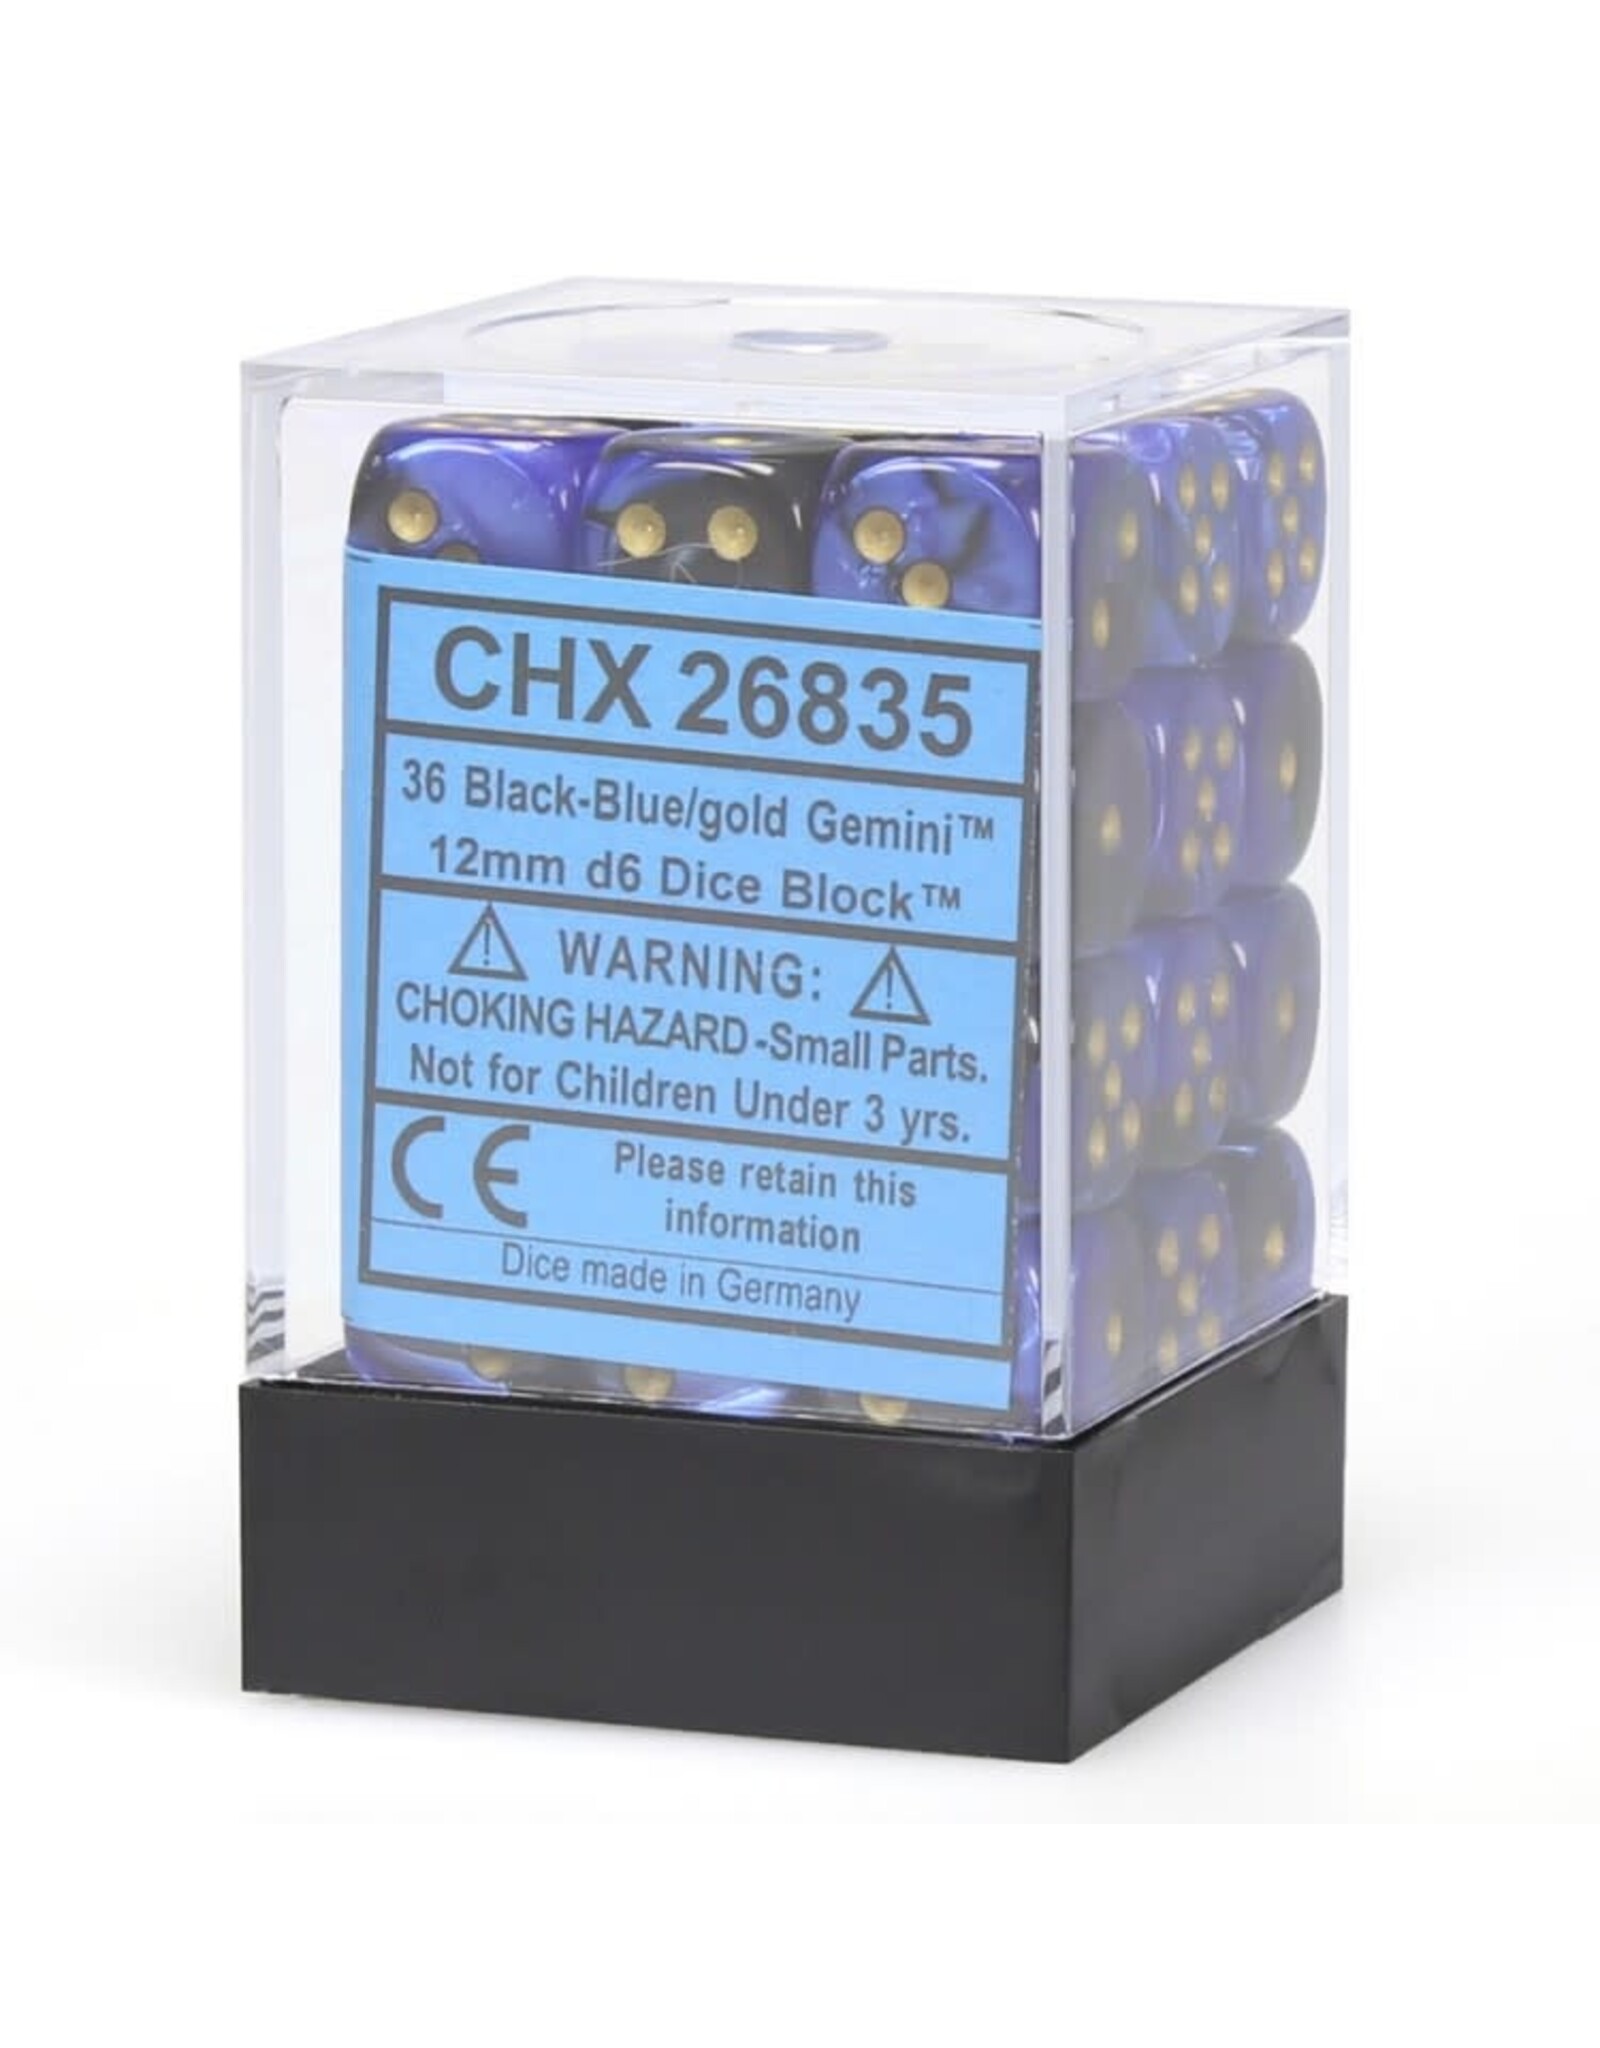 Chessex Black-Blue w/gold Gemini 12mm d6 dice set